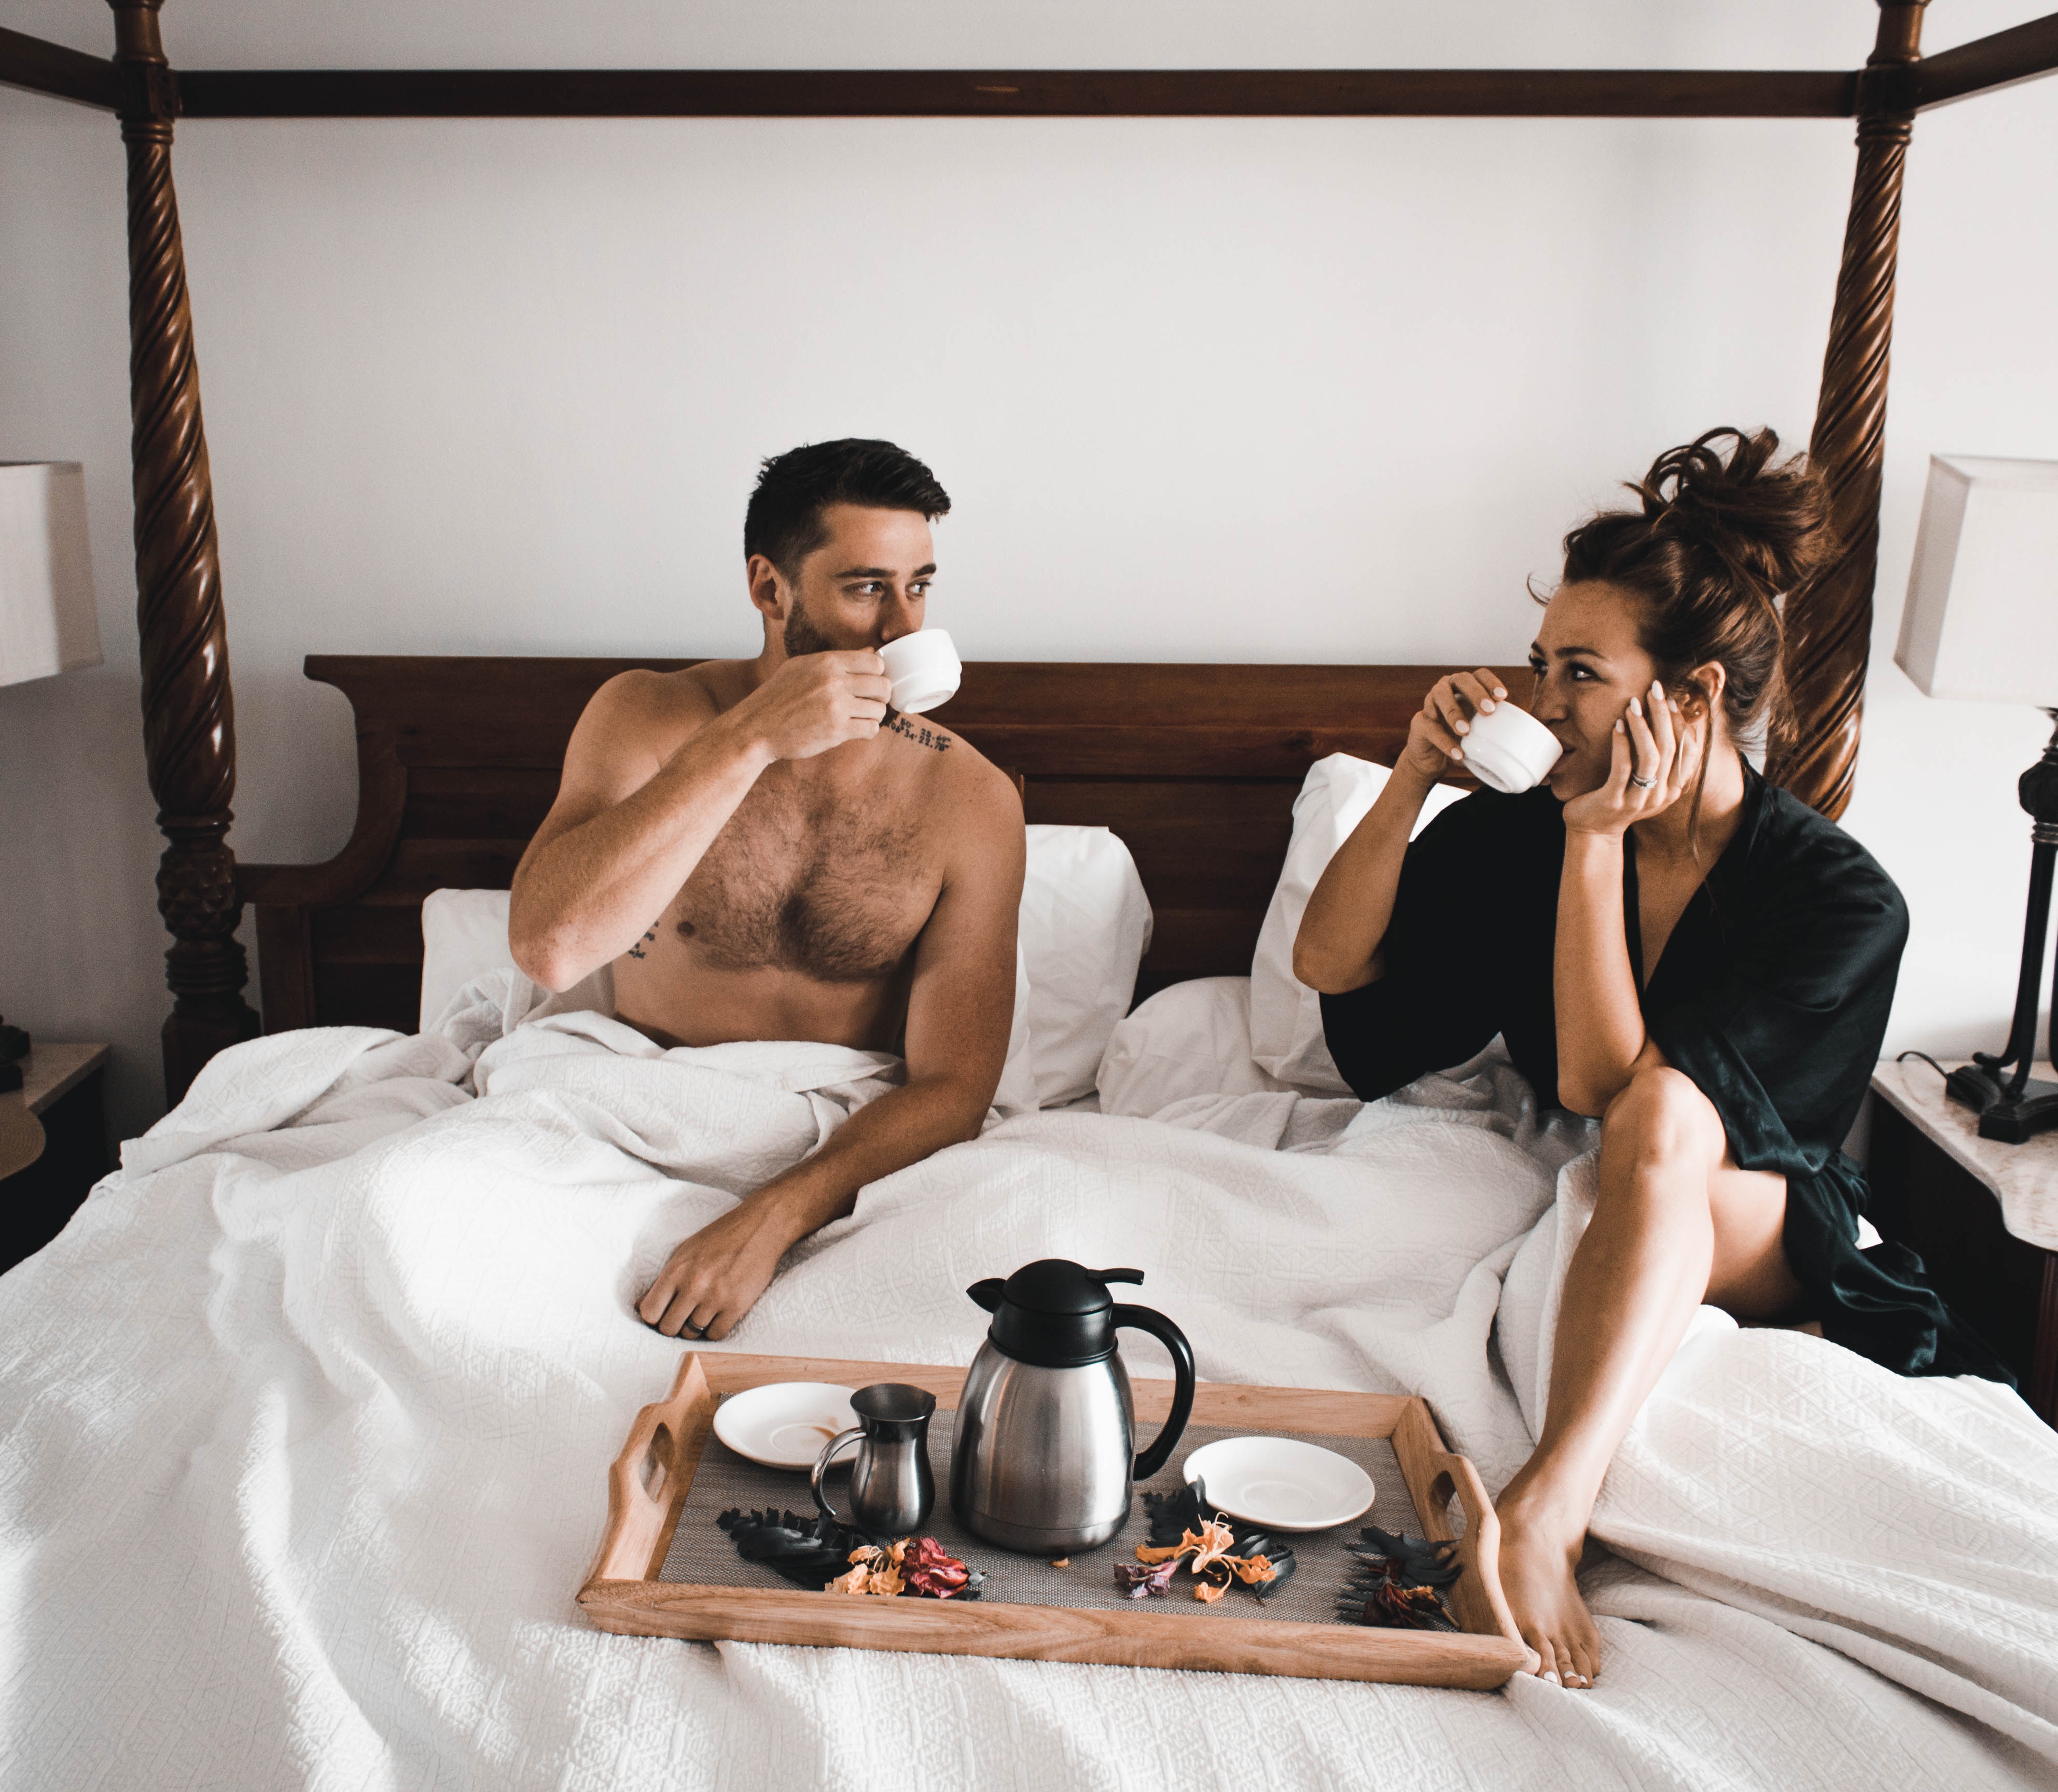 Romantic couple in bed | Source: Unsplash